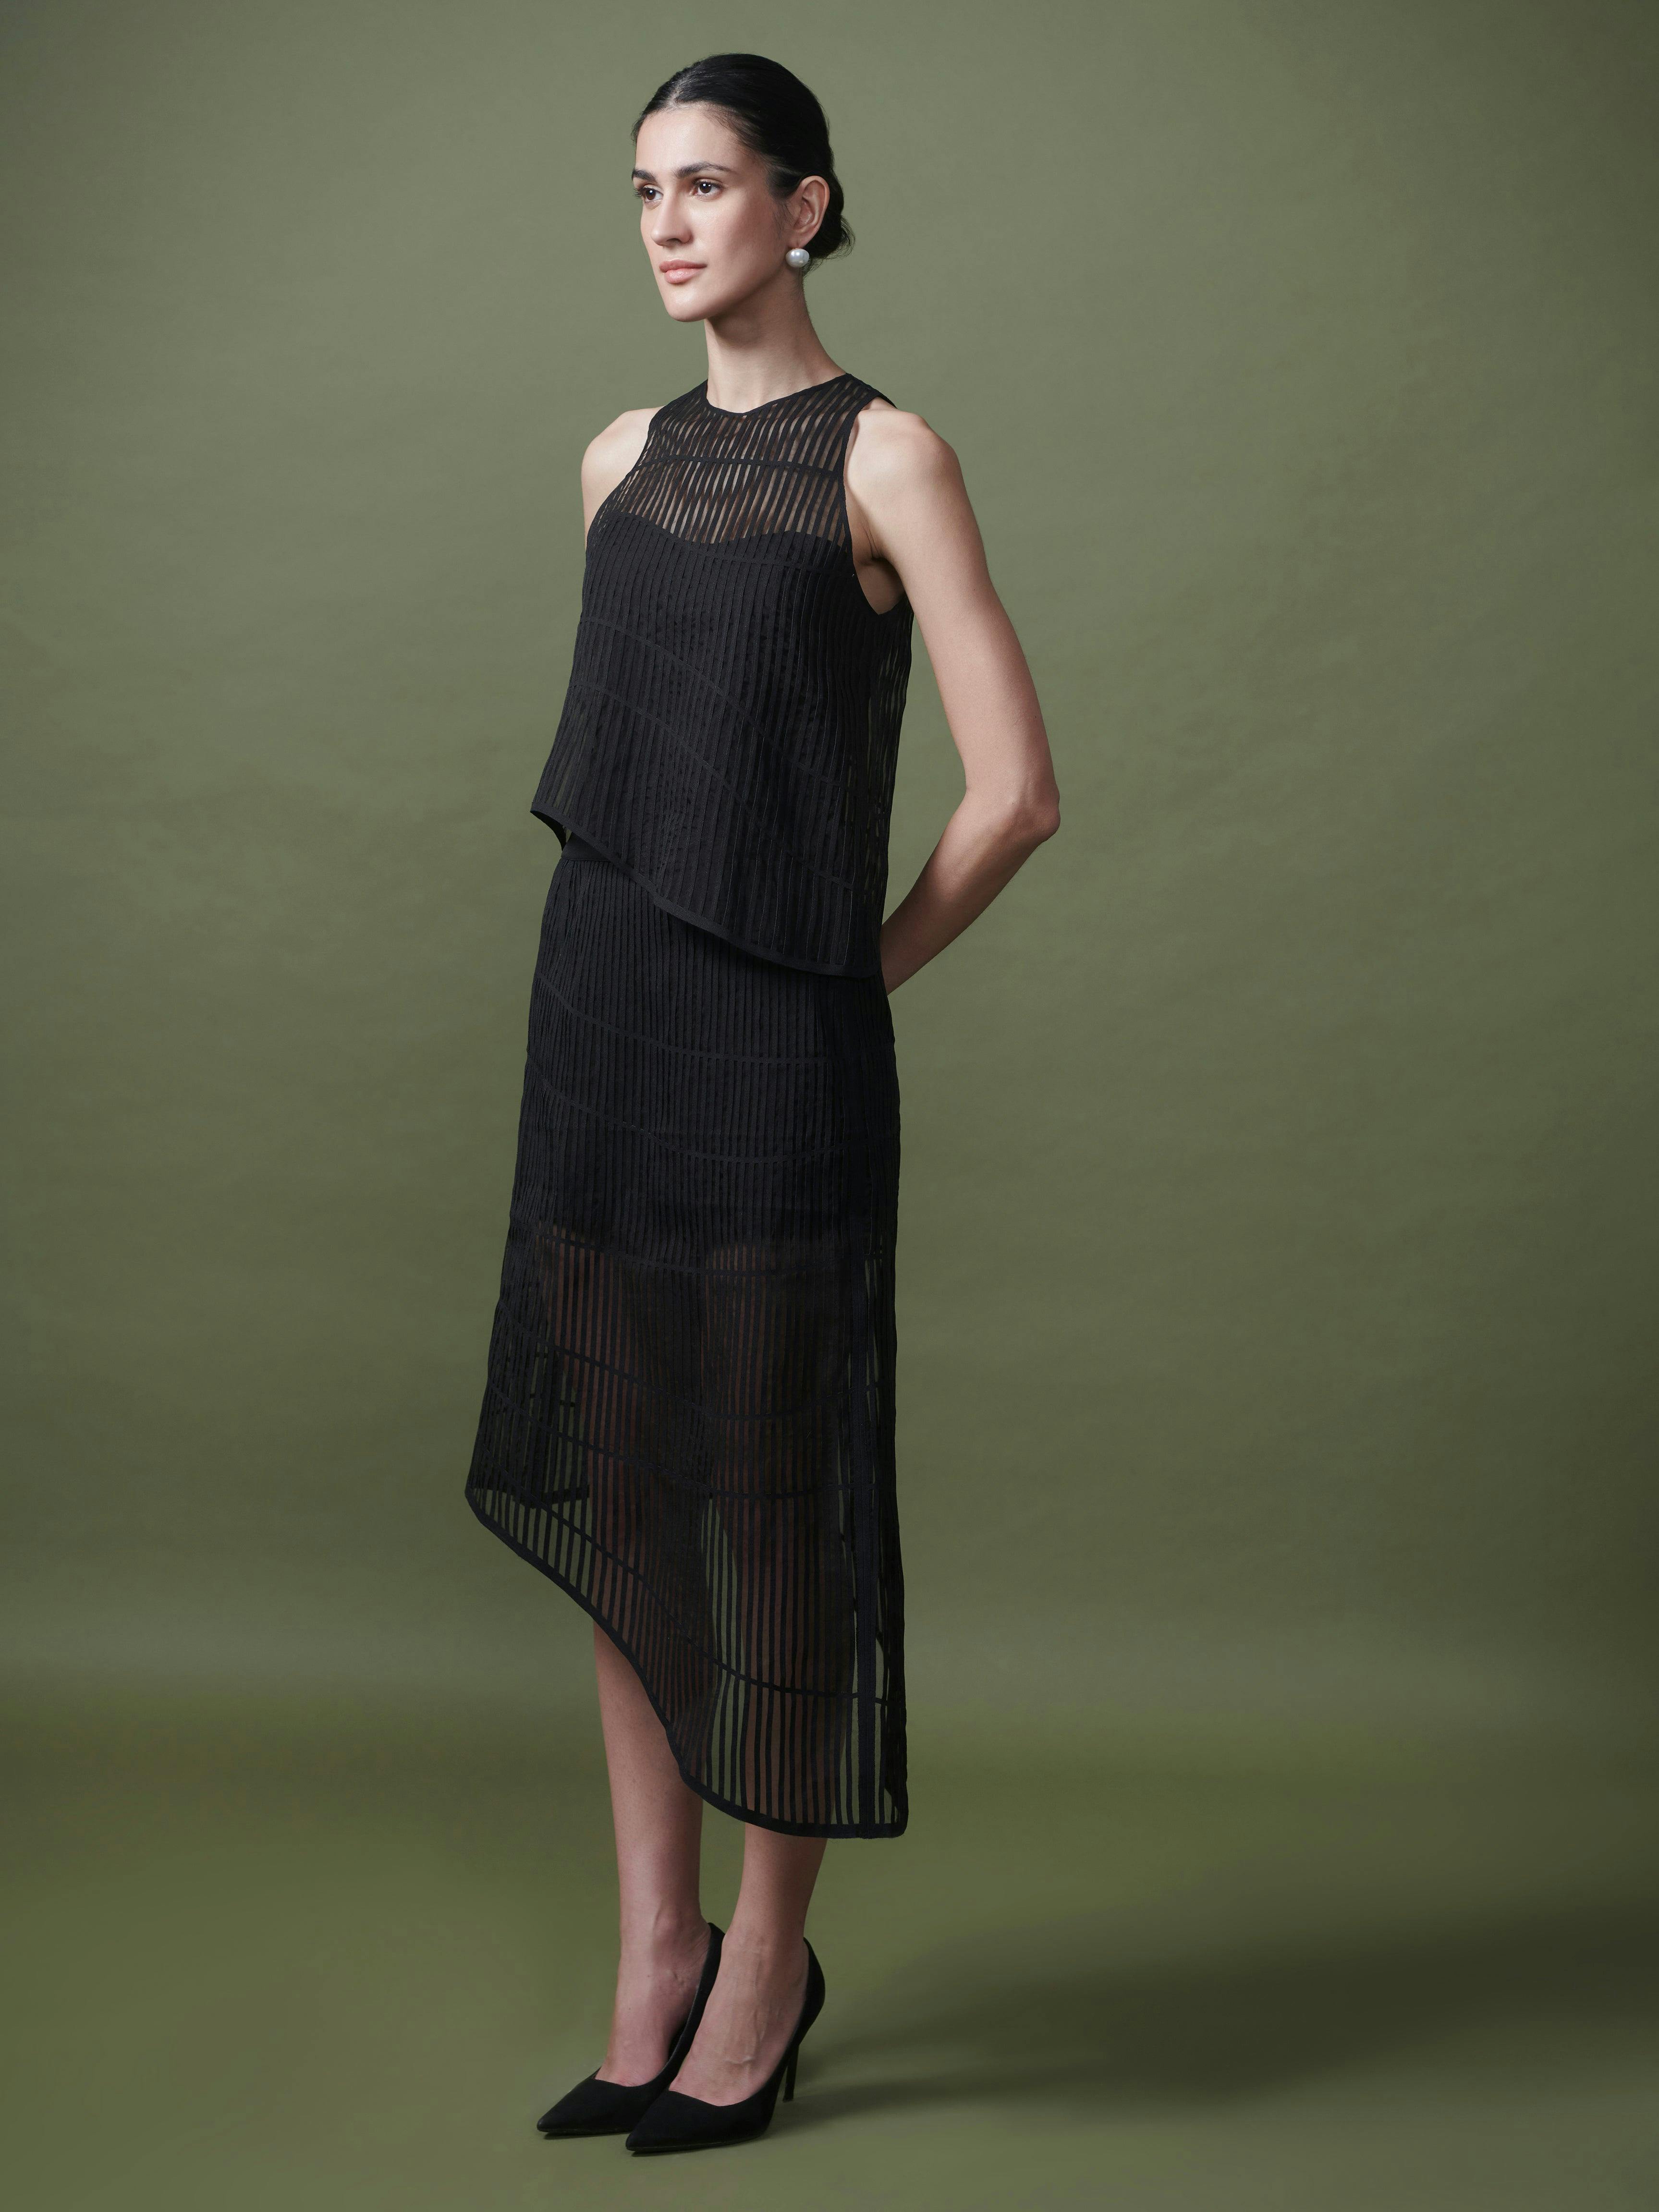 Linear patterned top & skirt, a product by Shriya Khanna